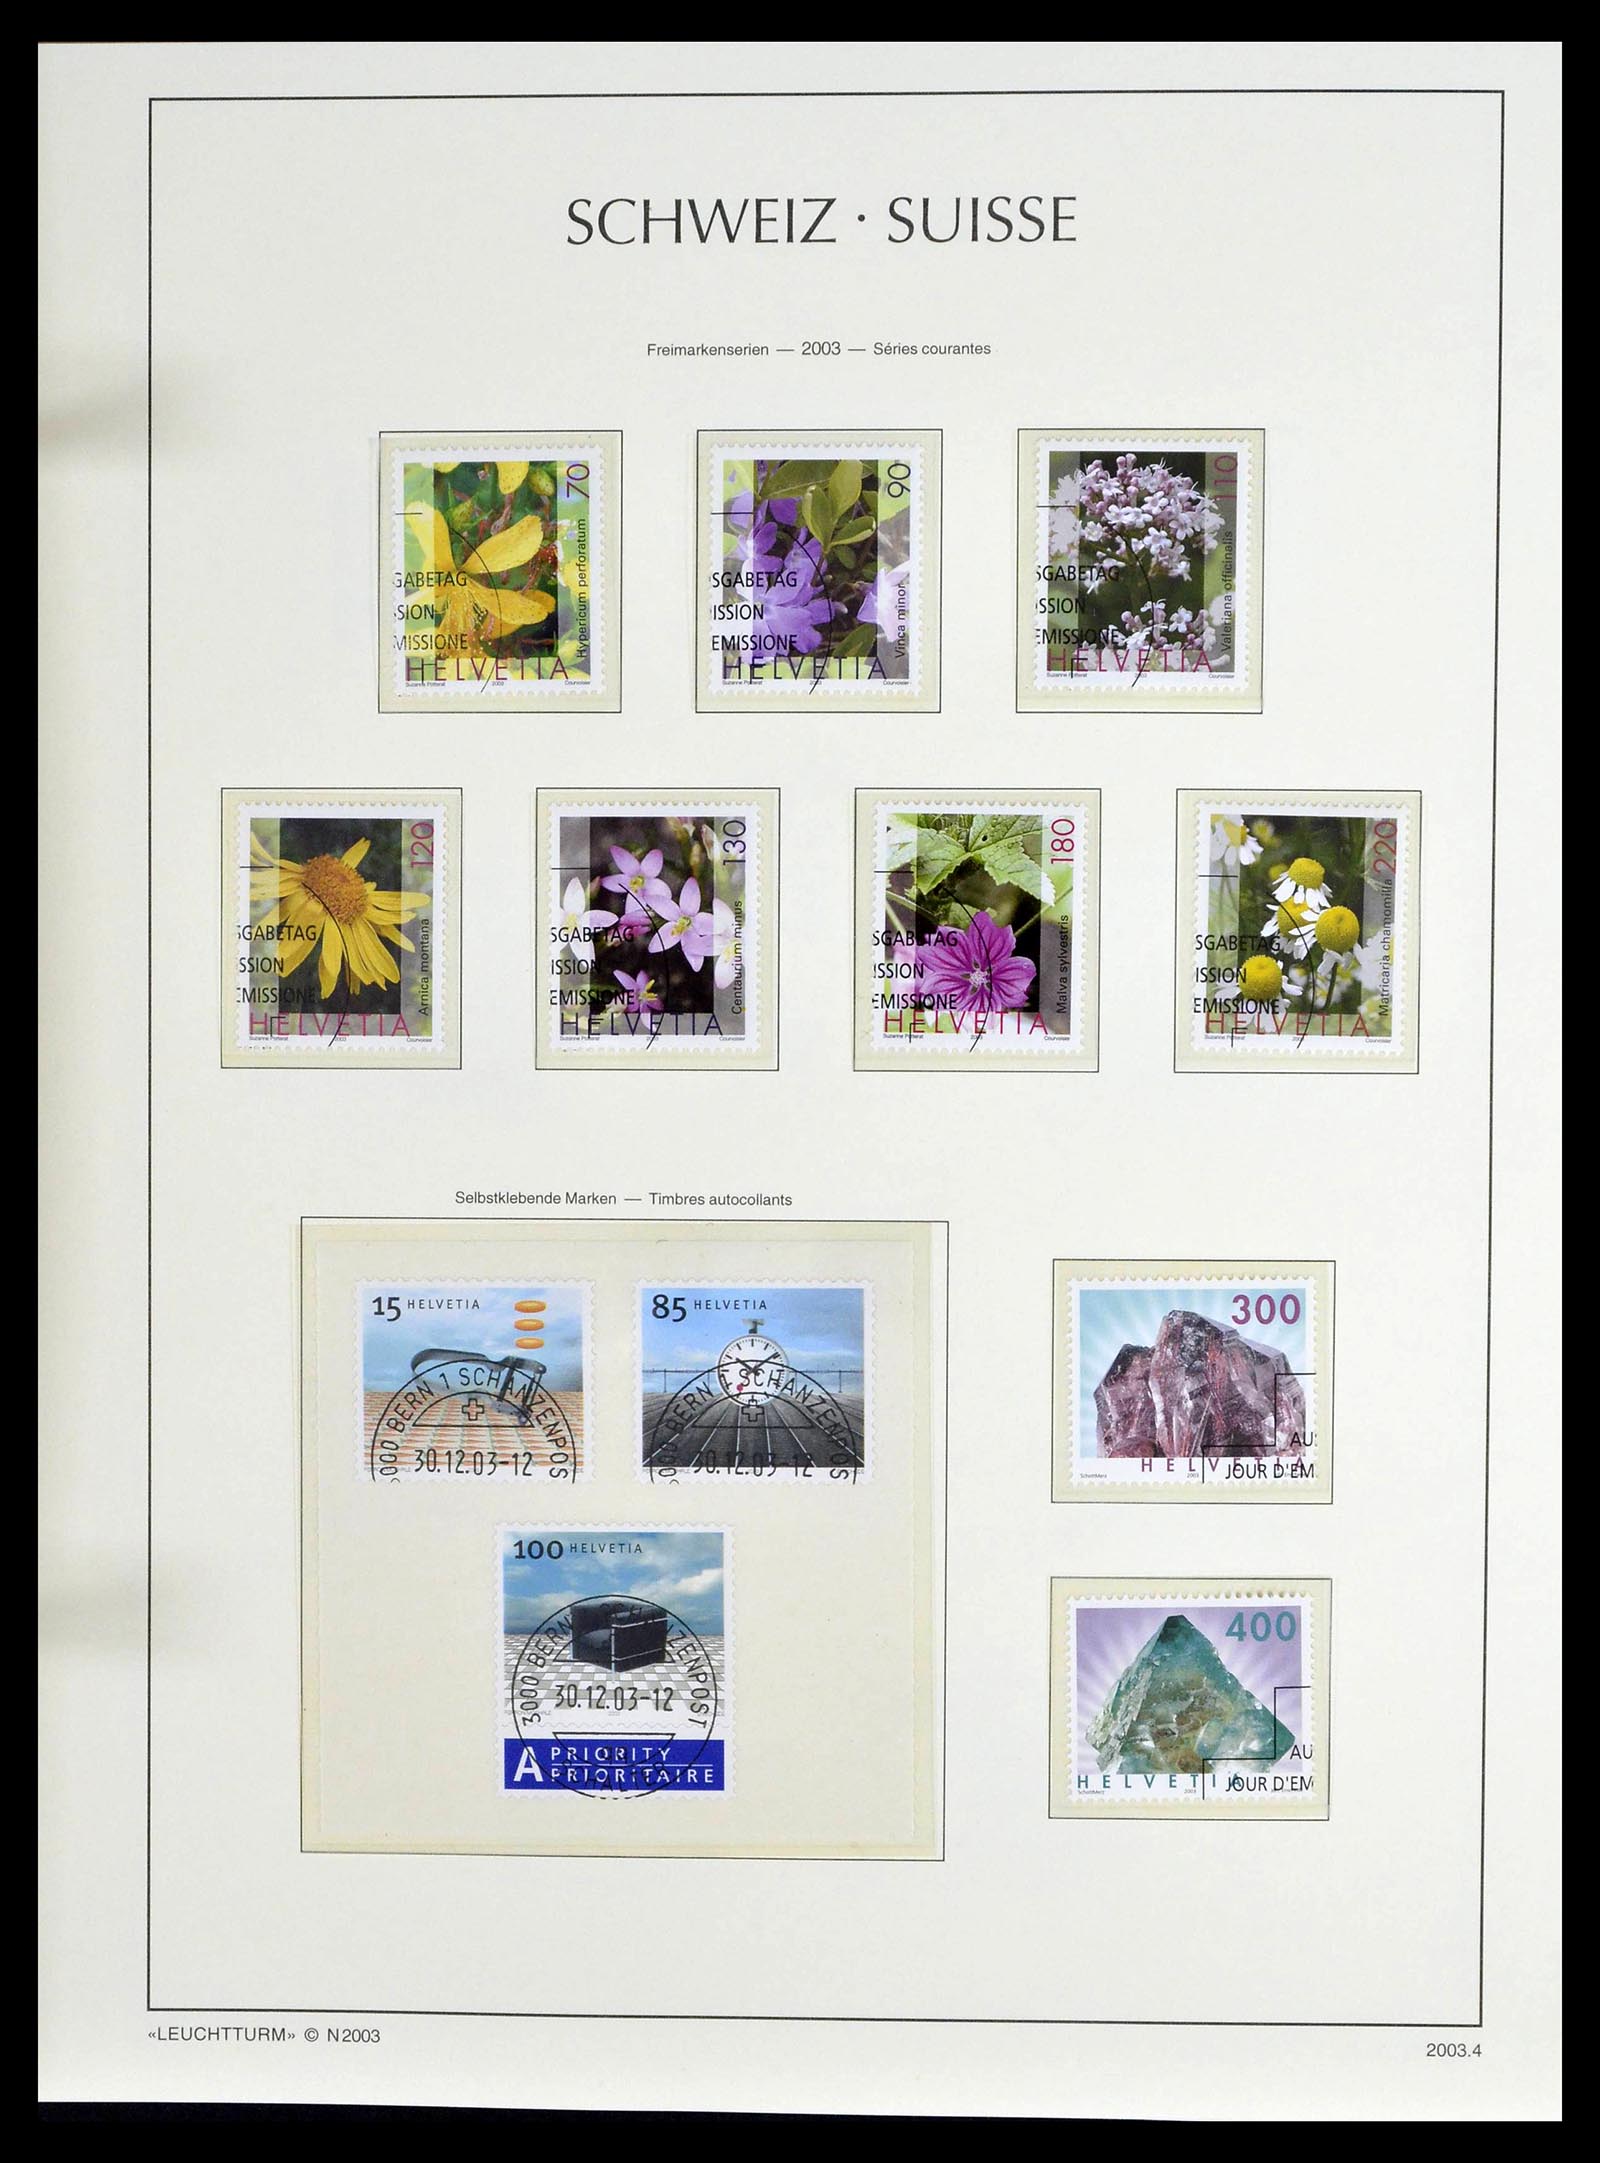 39094 0138 - Stamp collection 39094 Switzerland 1850-2005.